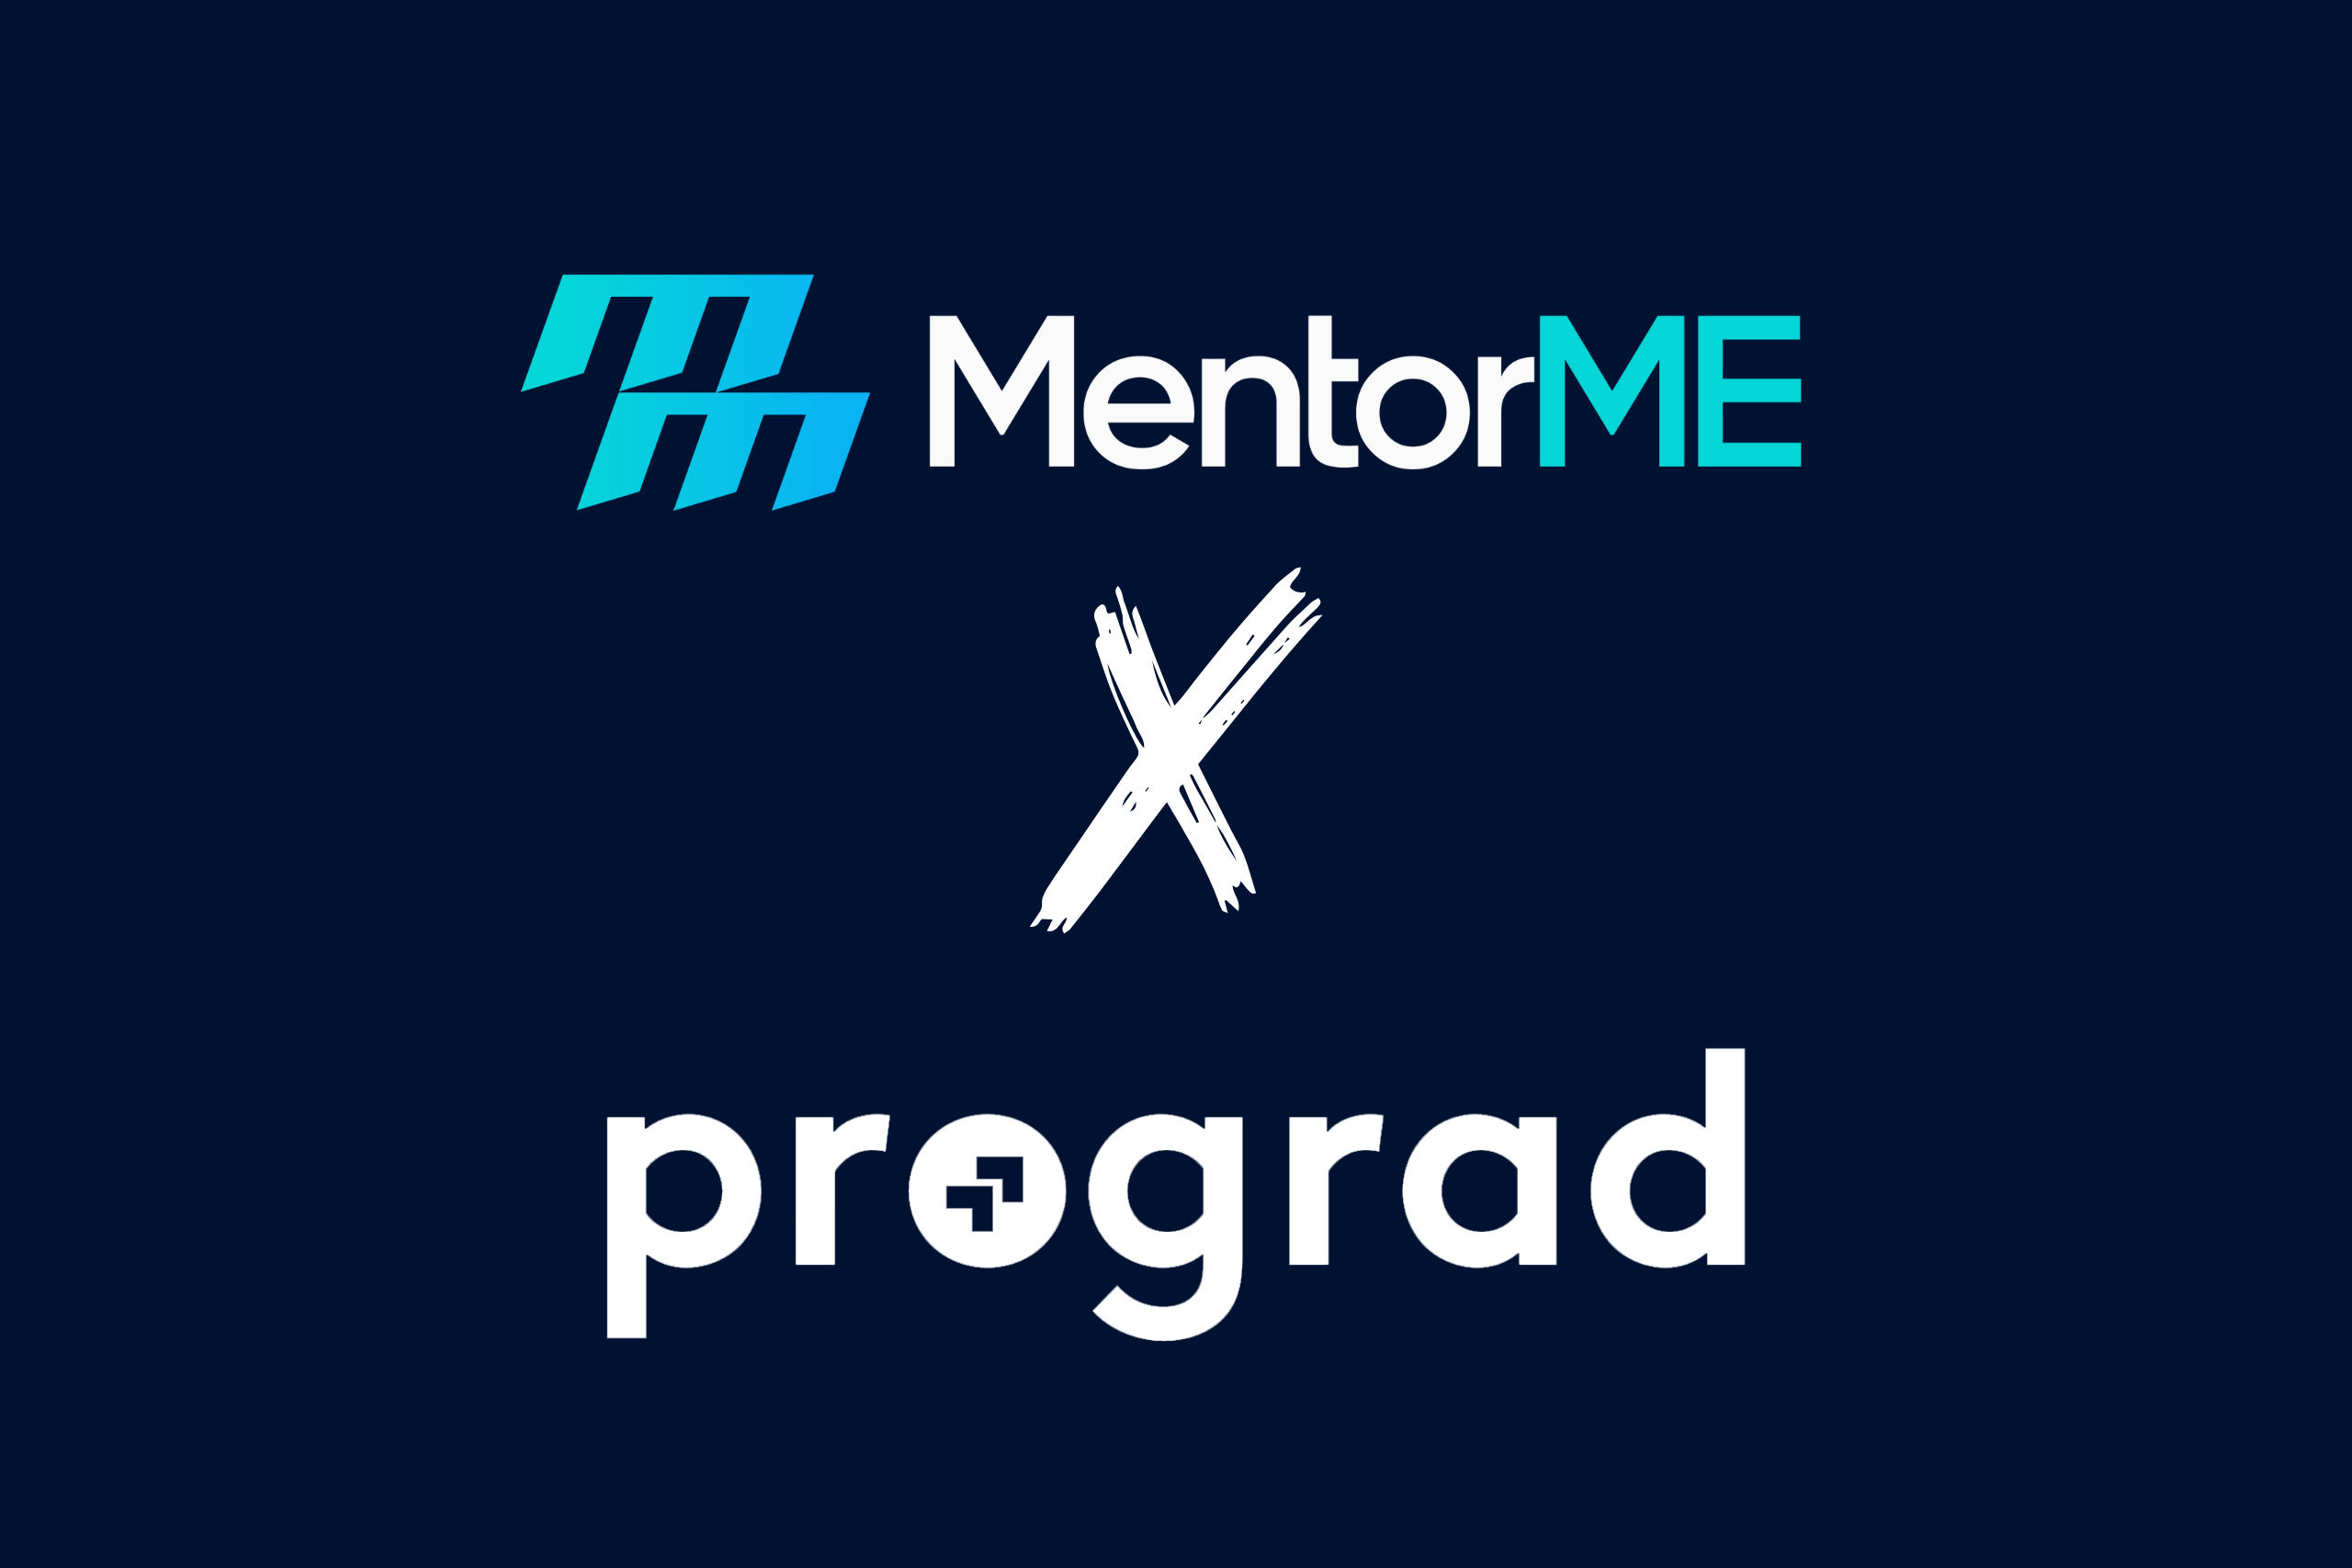 MentorME-x-Prograd-partnership